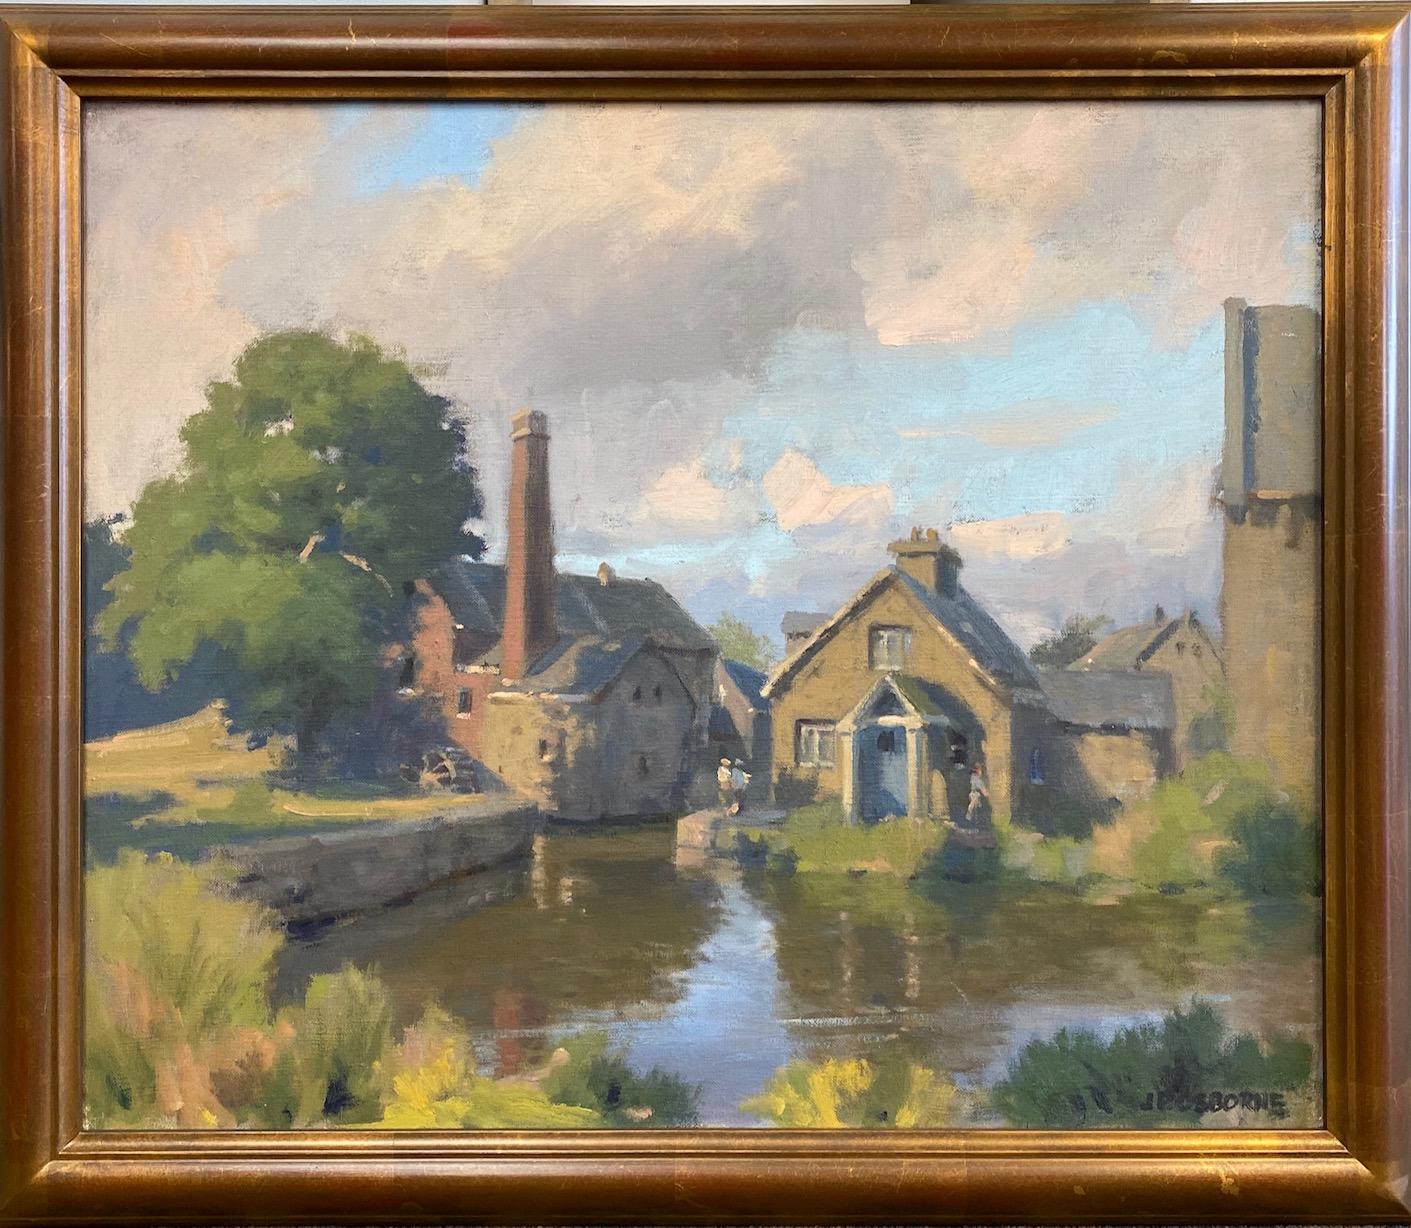 John Phillip Osborne Figurative Painting - The Mill, First Slaughter, original impressionist English landscape